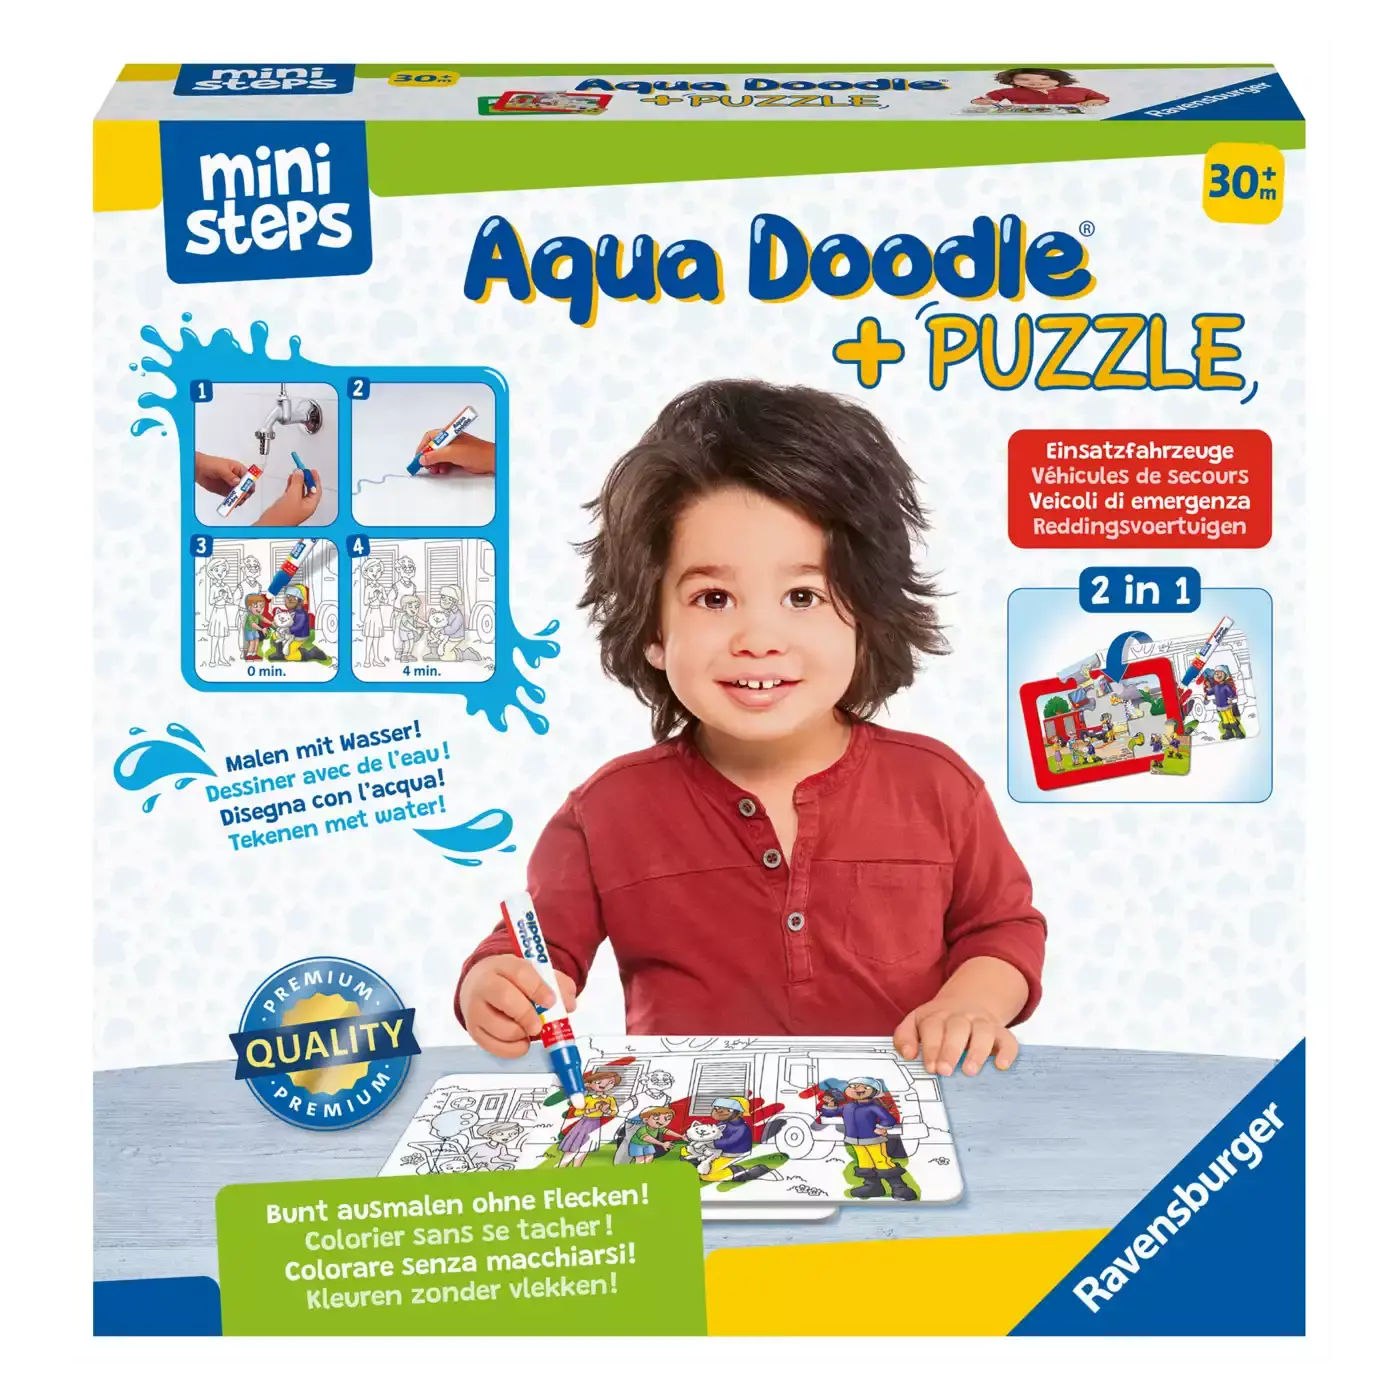 Mini Steps Aqua Doodle Puzzle Einsatzfahrzeuge Ravensburger 2000579738708 3